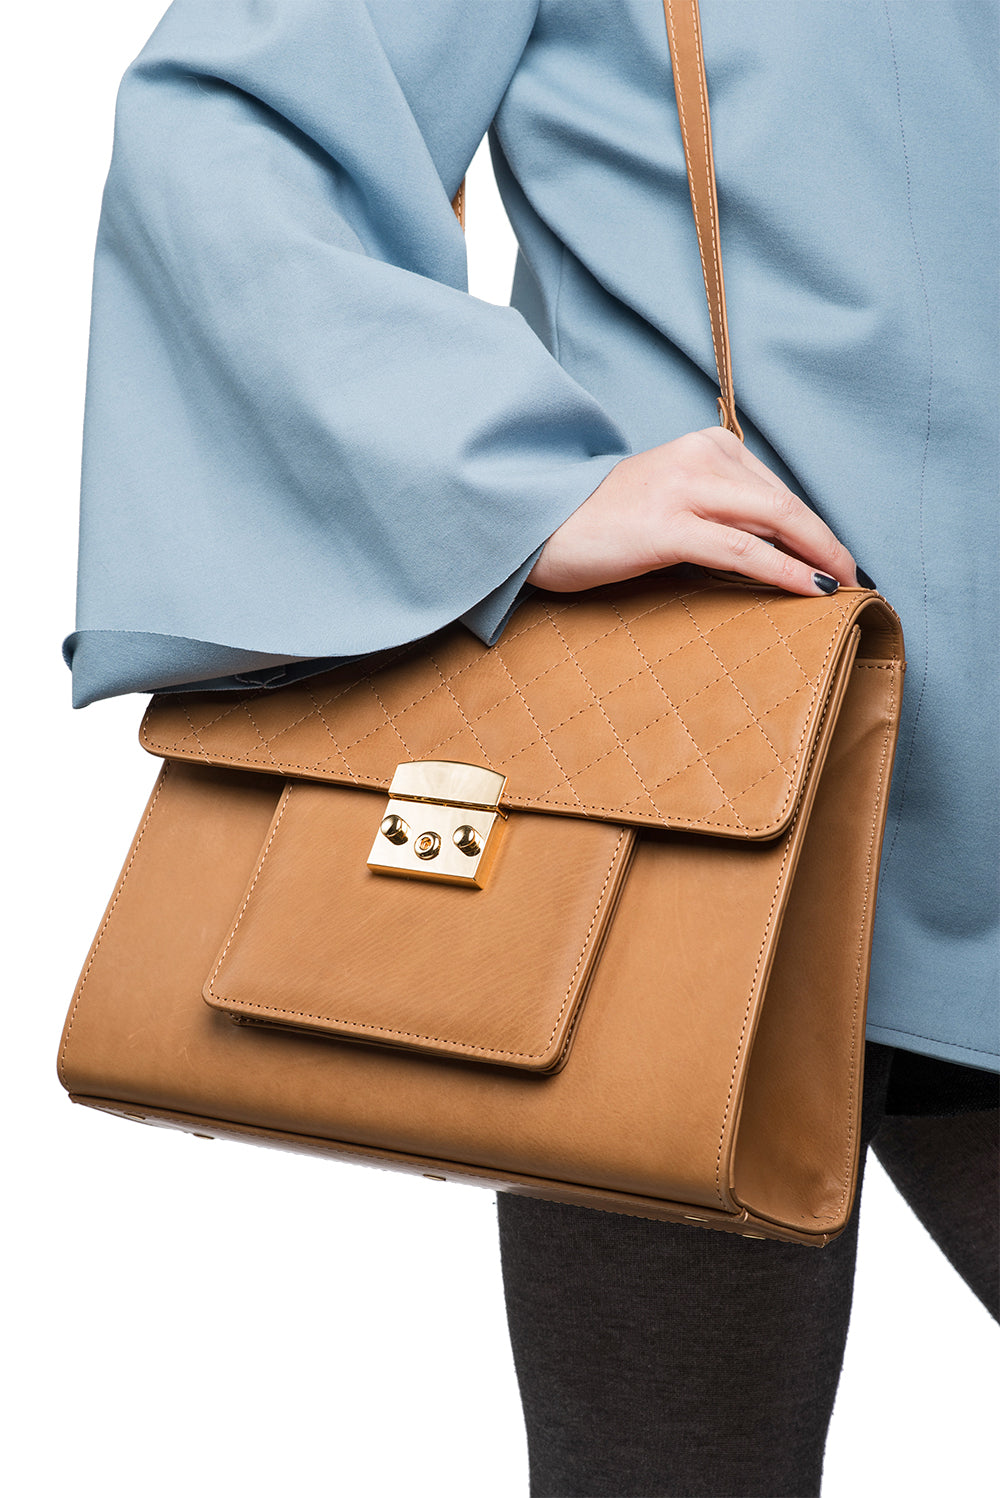  leather handbag - camel